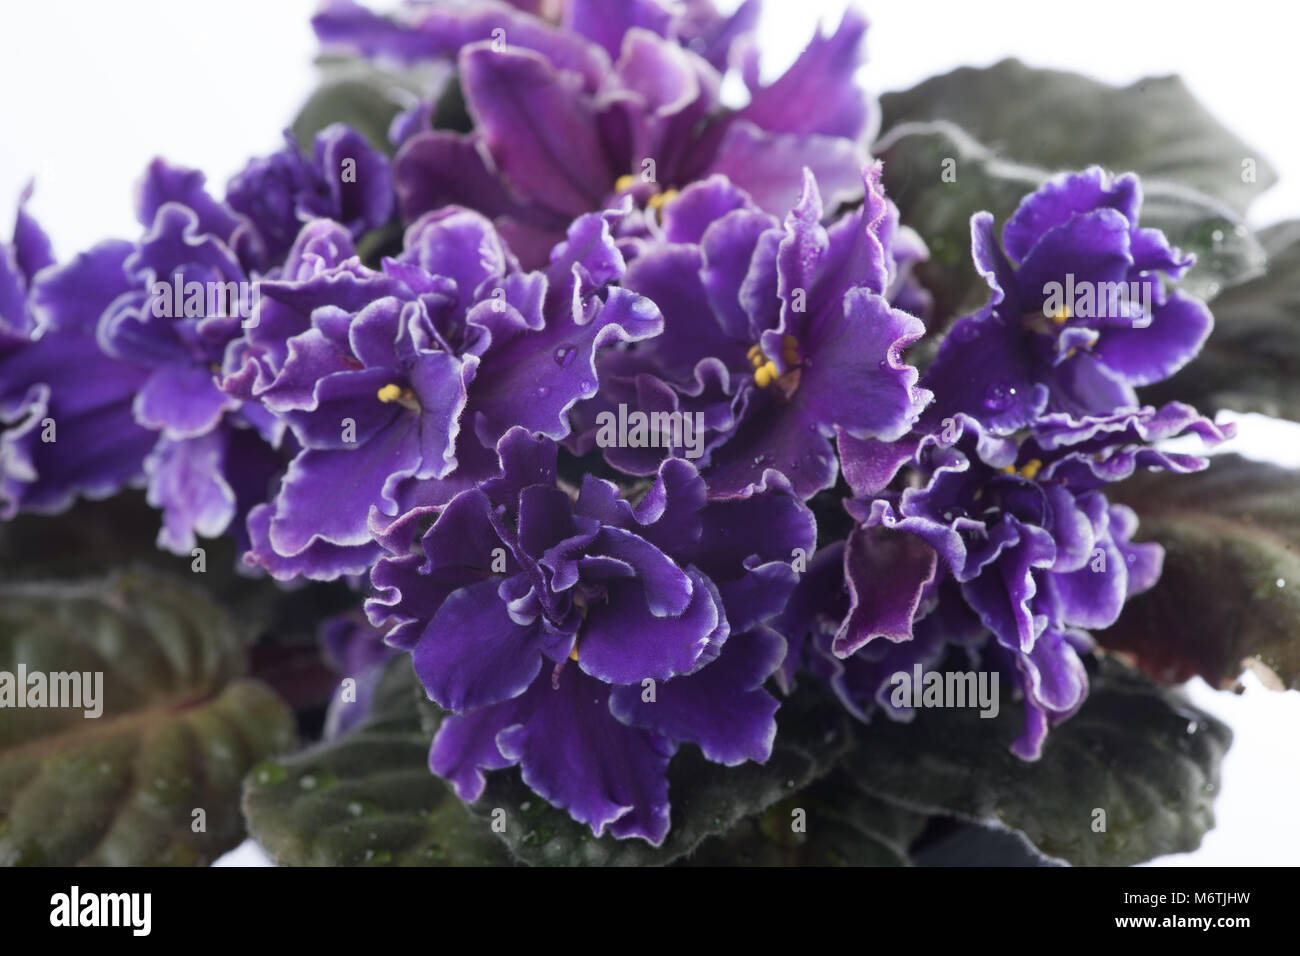 African Violet, Saintpaulia (Saintpaulia ionantha) Stock Photo